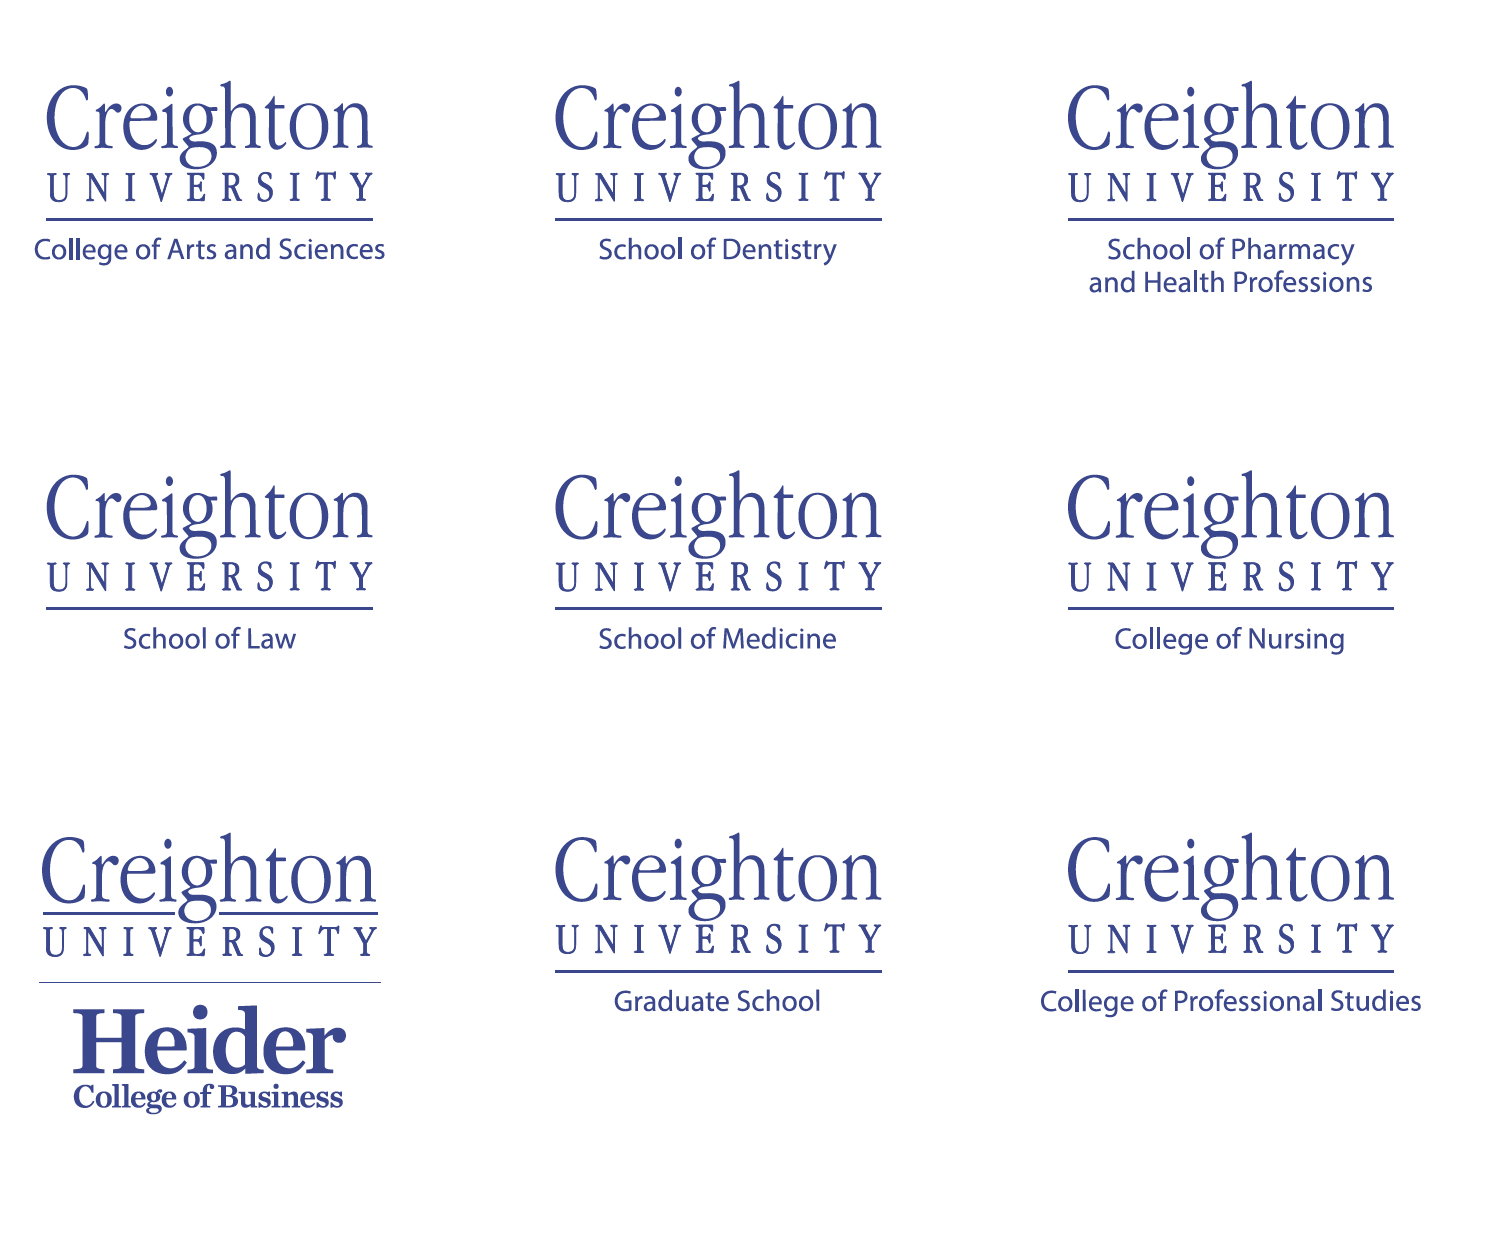 Center-Aligned Secondary Logos